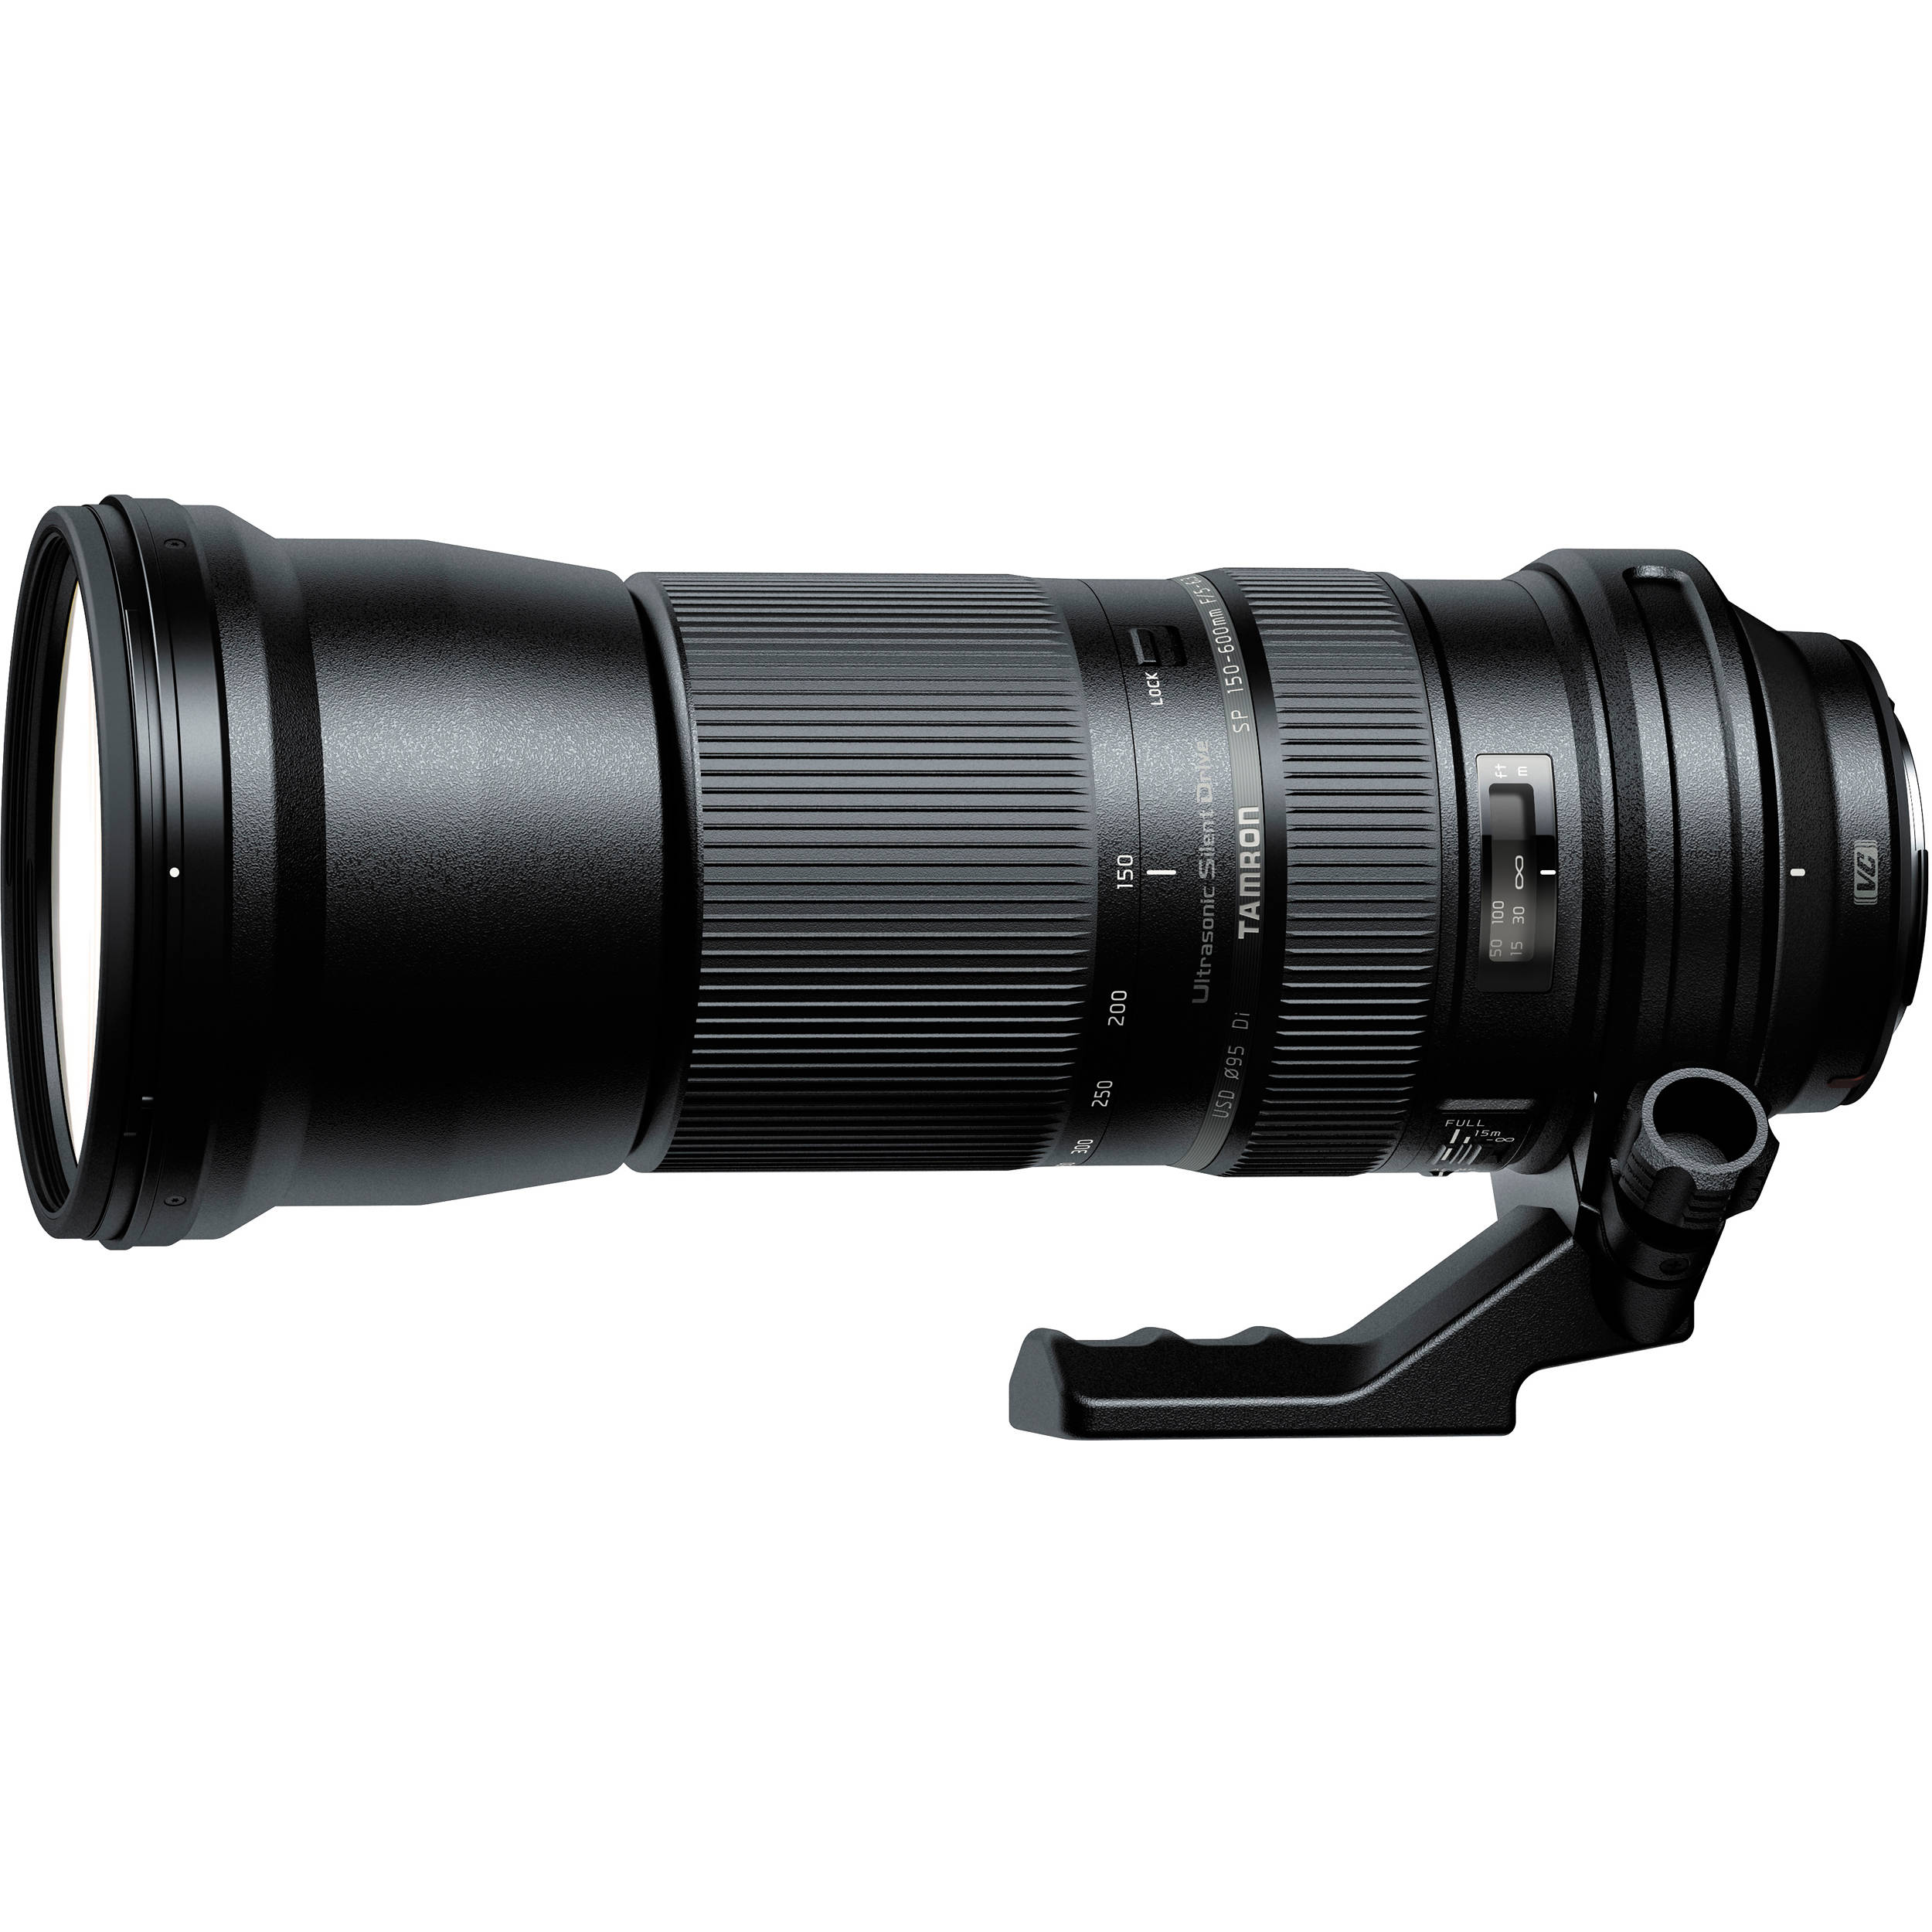 Tamron SP 150-600mm Lens